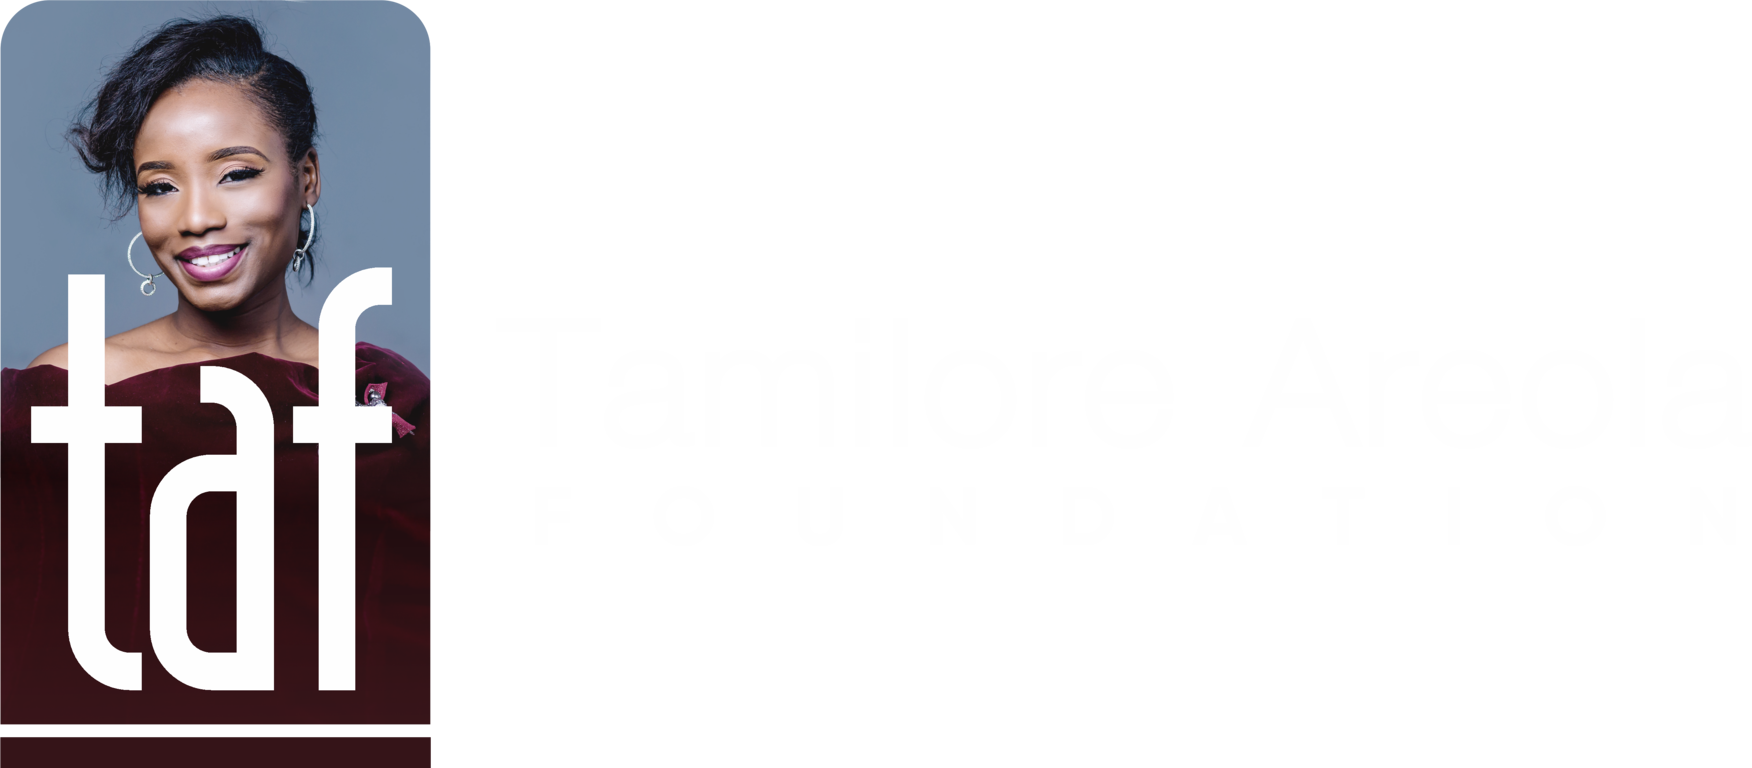 TamiloreAreolaFoundation